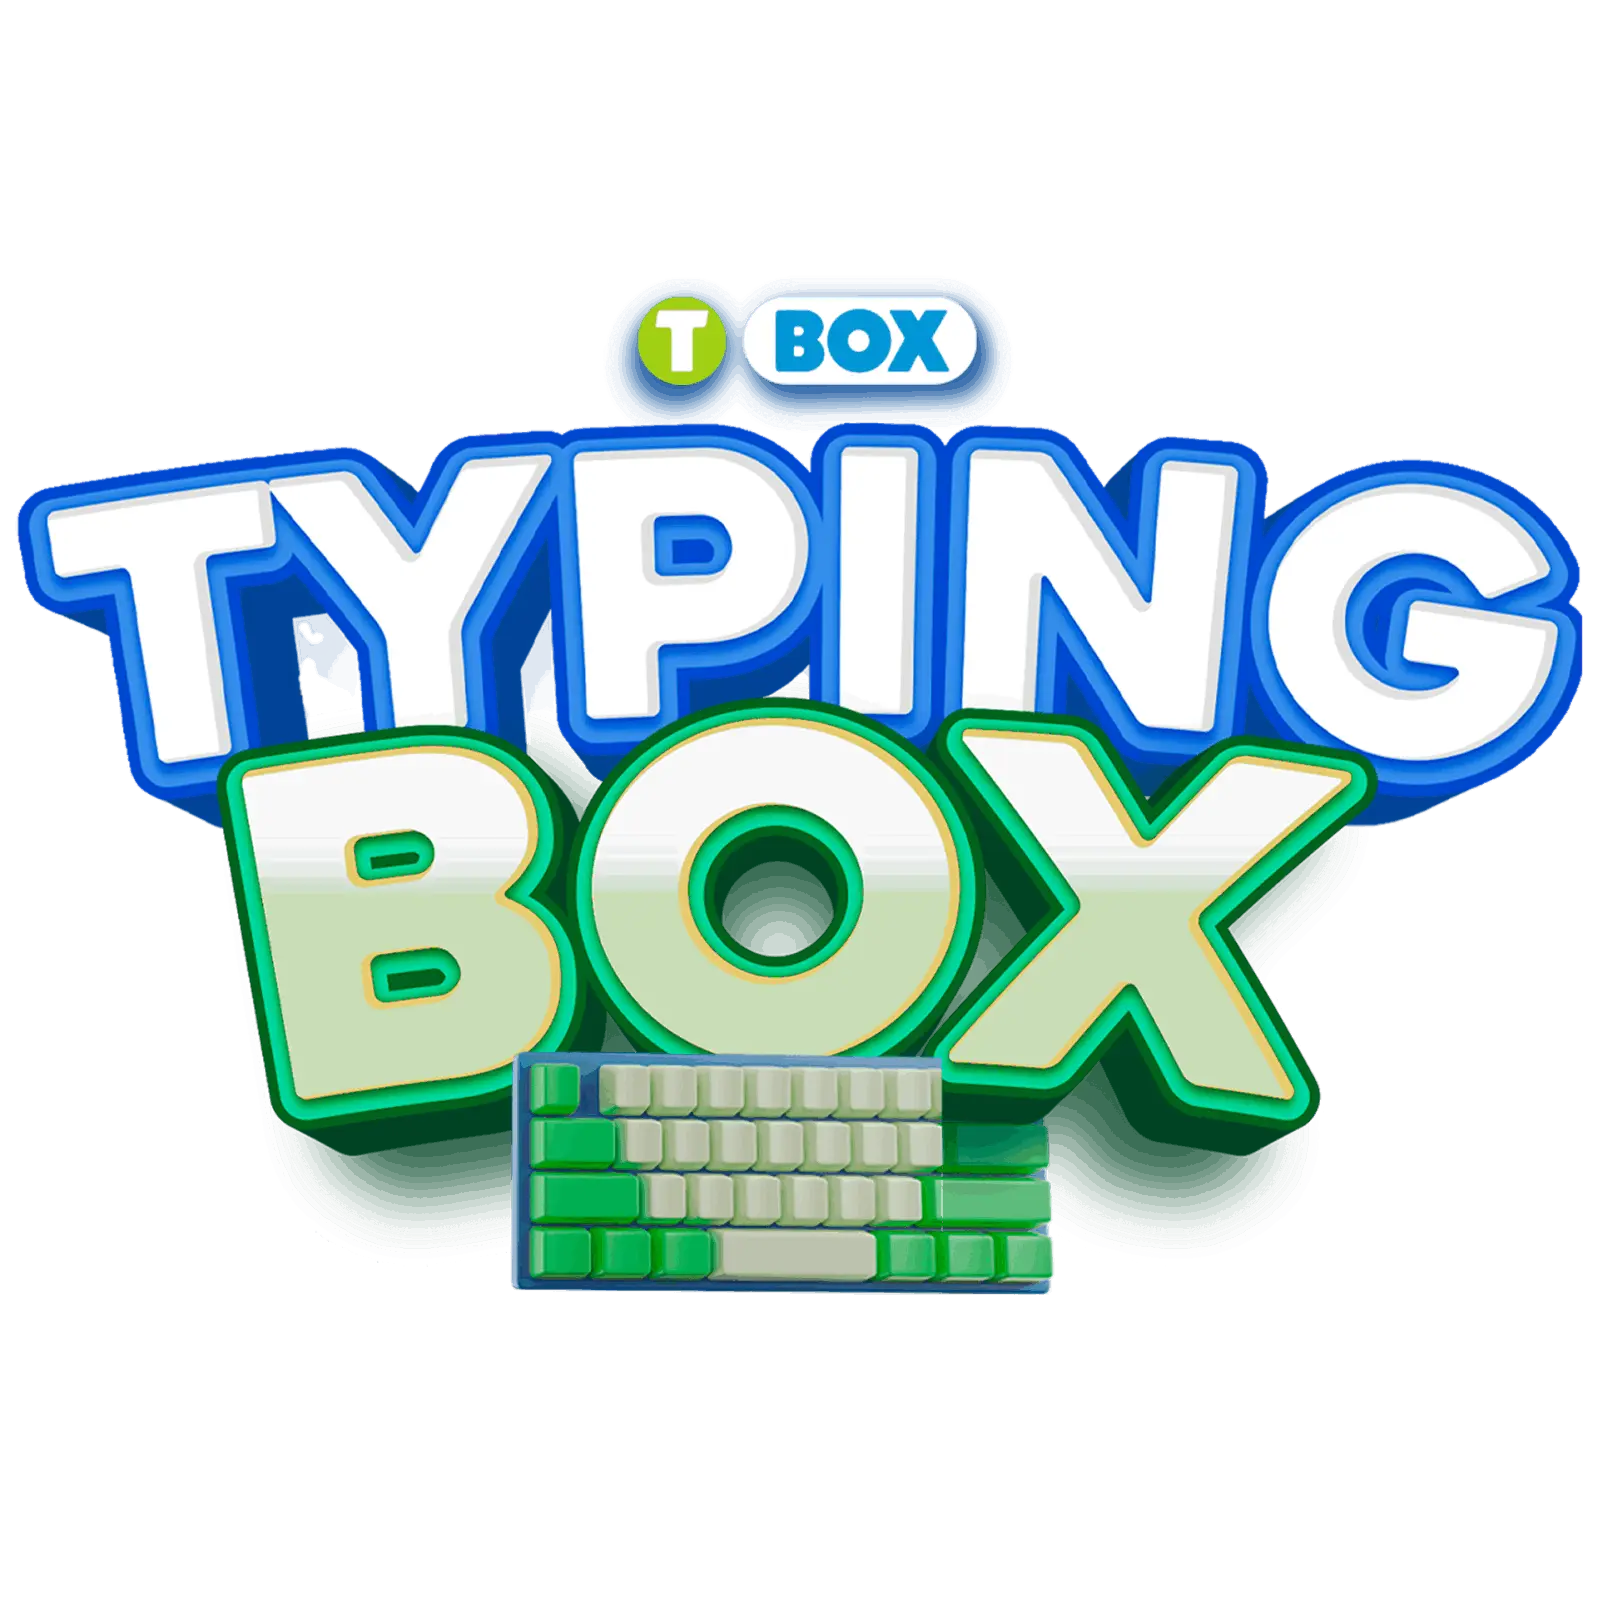 TypingBox de TBox